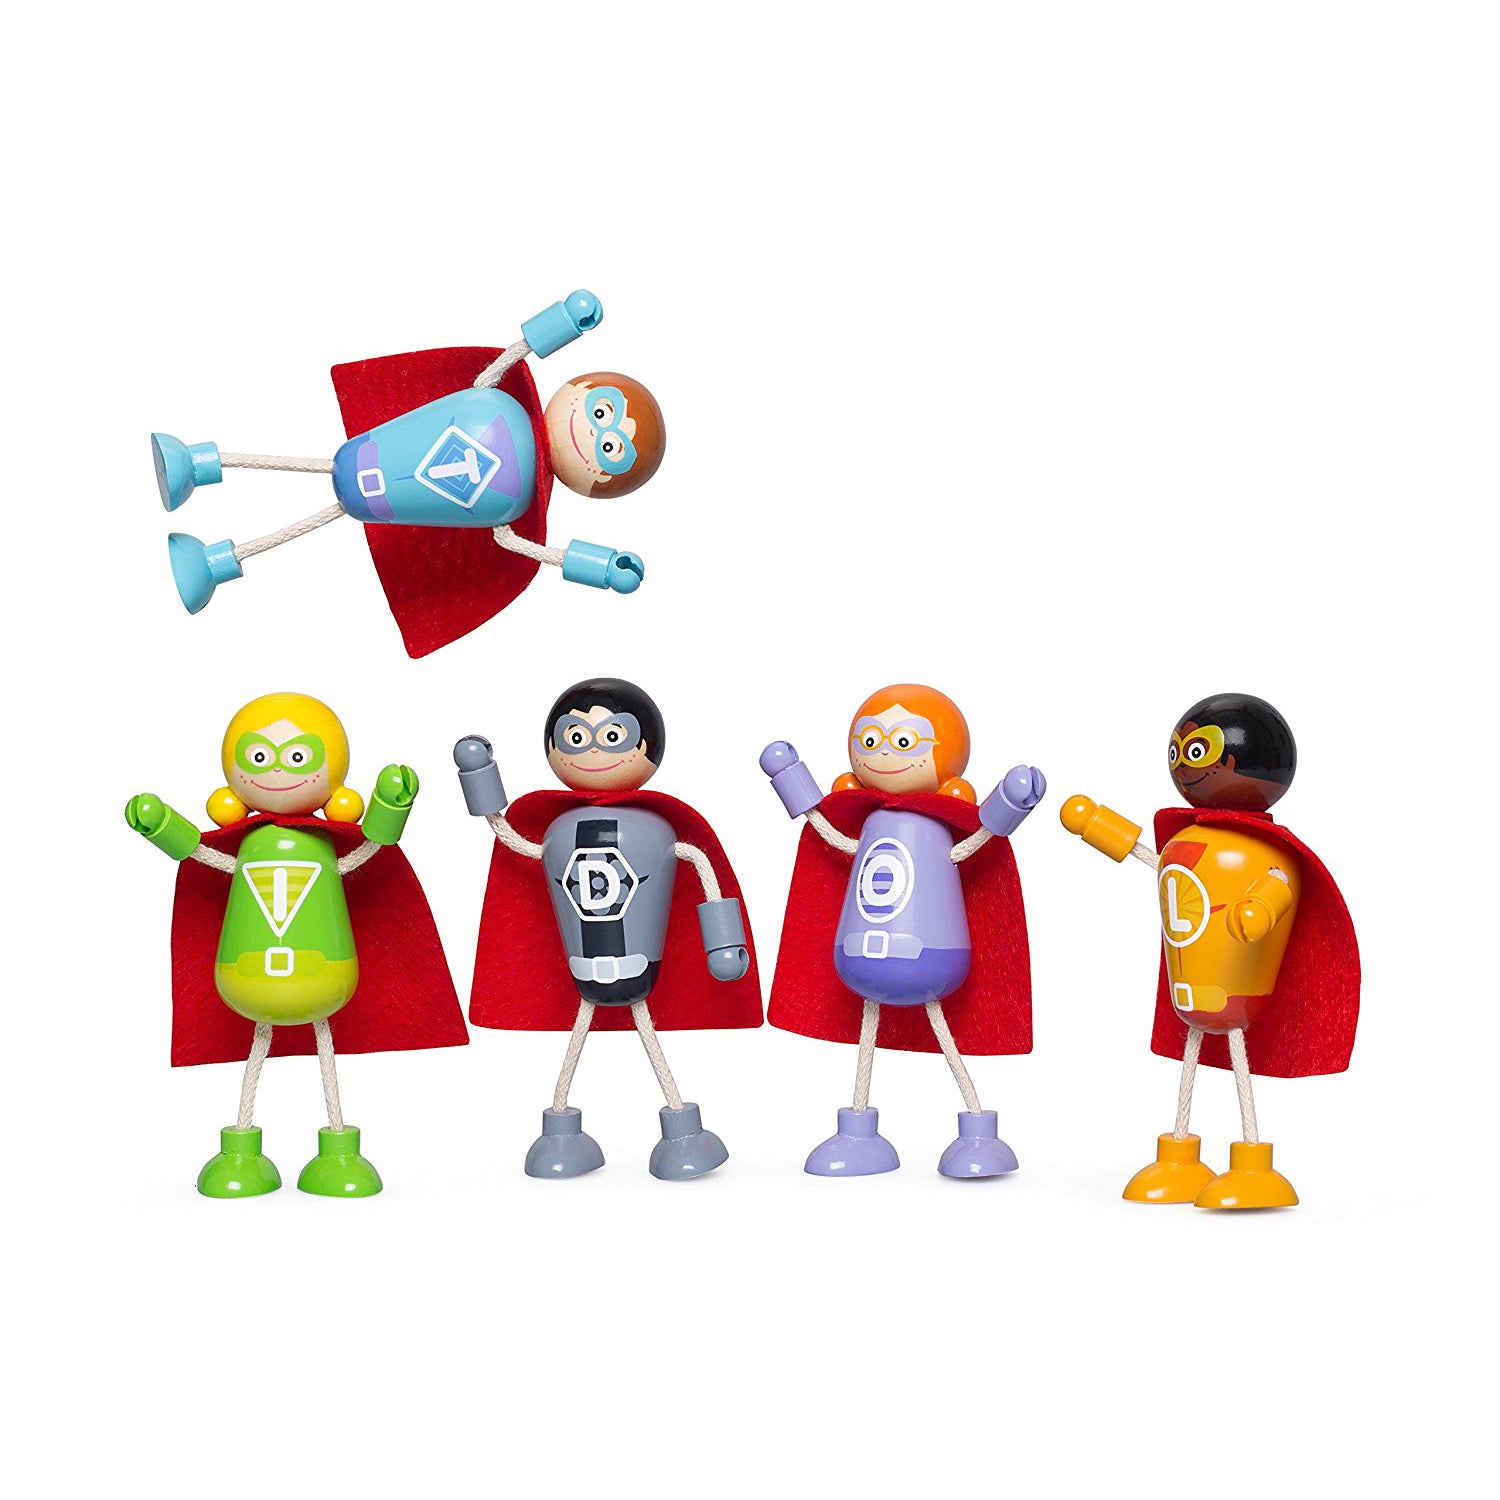 Superhero Set, 5 characters unboxed 